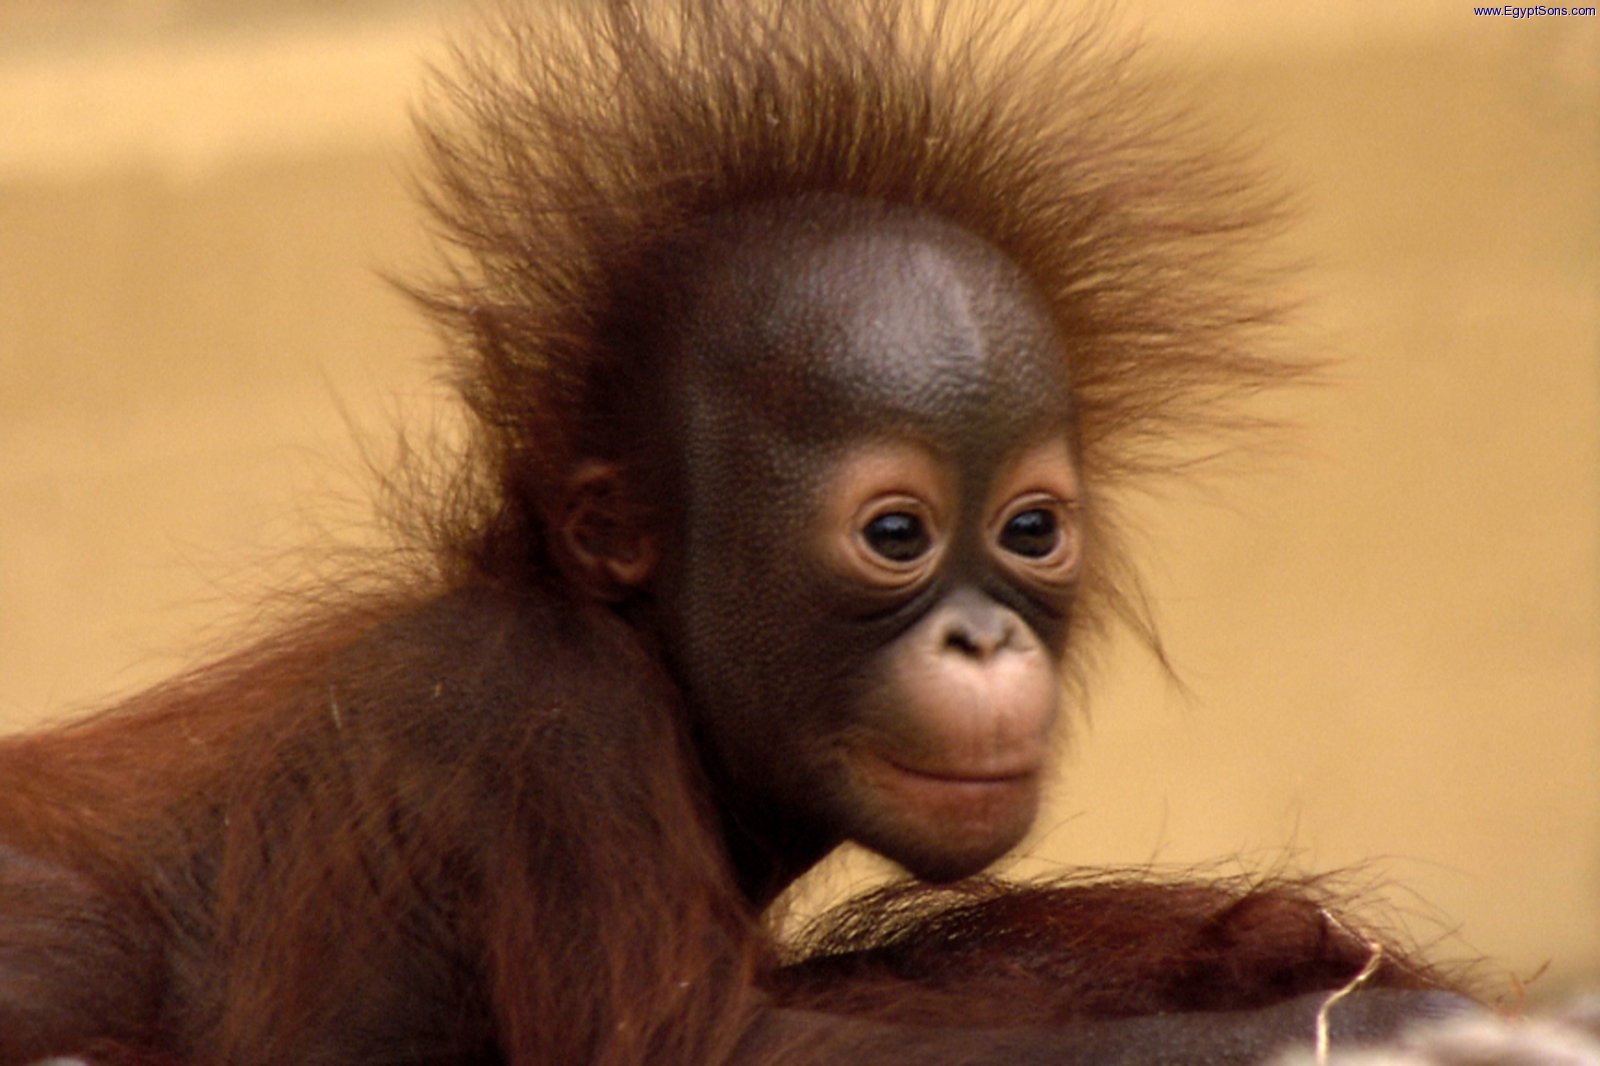 Baby_Planet_ep01_Orangutan.jpg